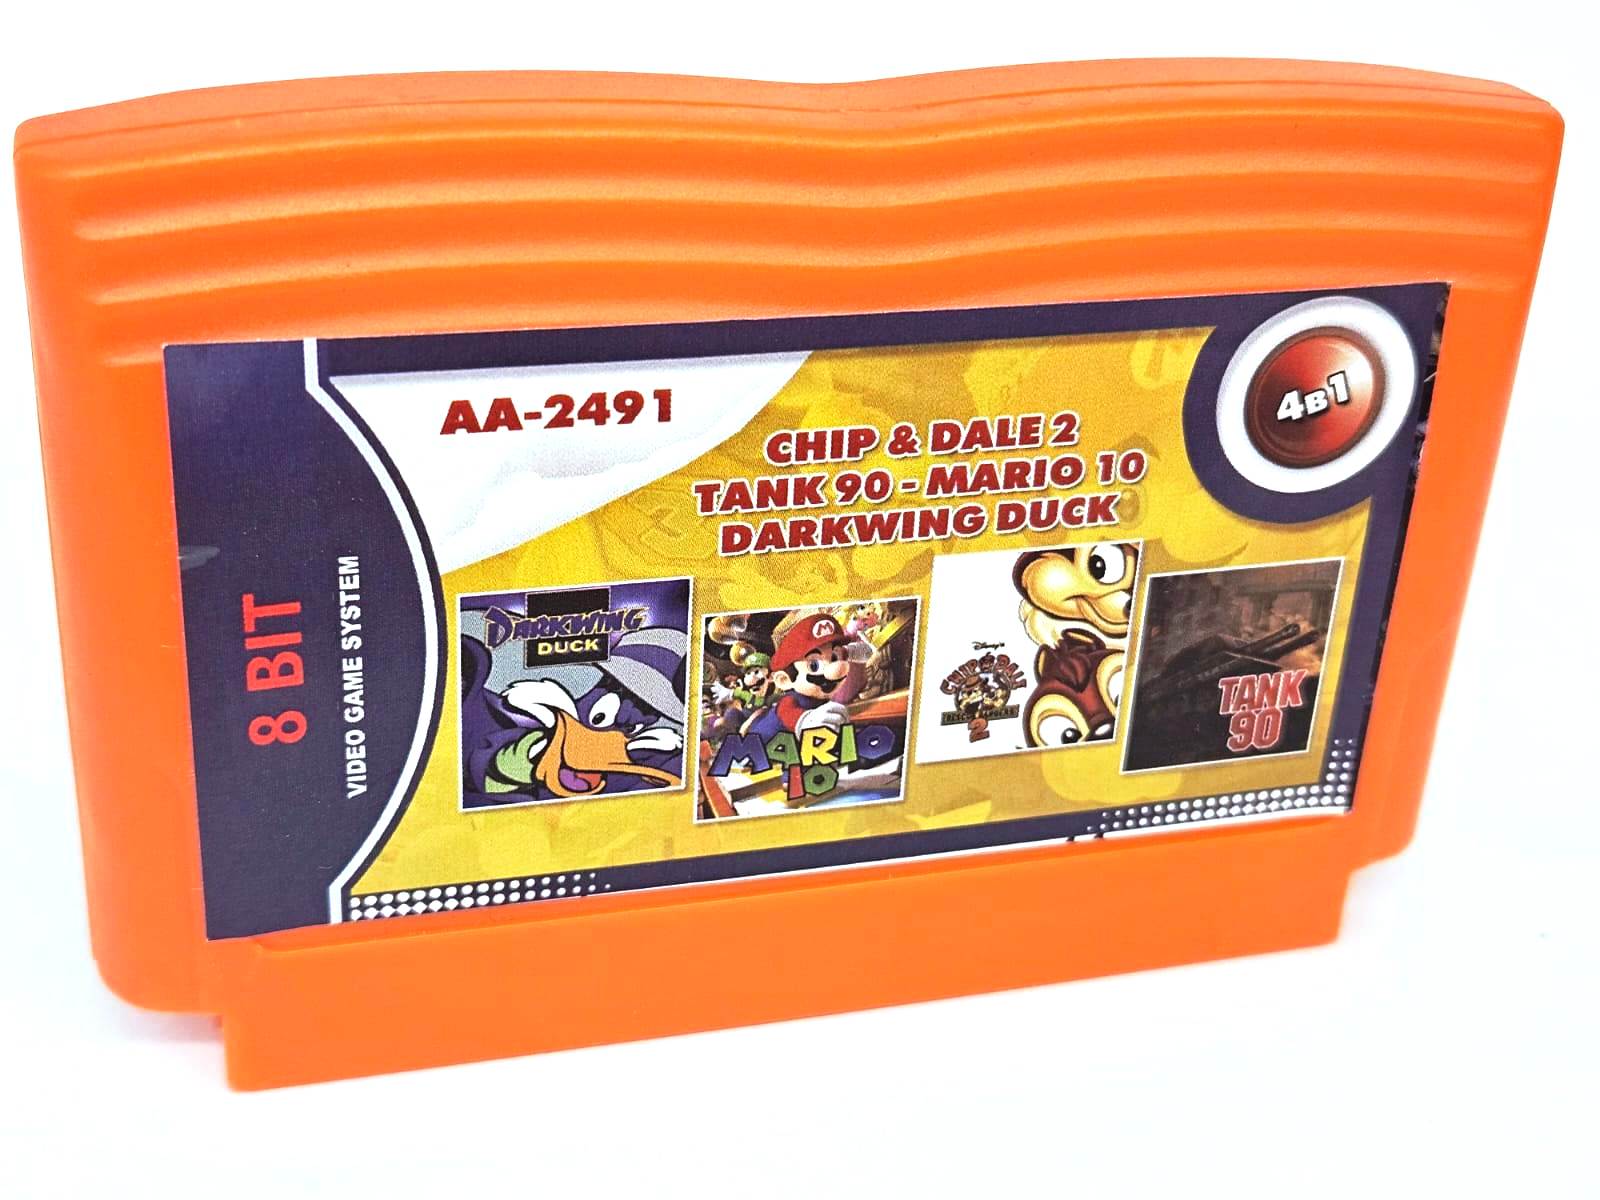    AA-2491 4 in 1 (Dendy), Darkwin Duck, Chip & Dale, Tank 90, Mario 10